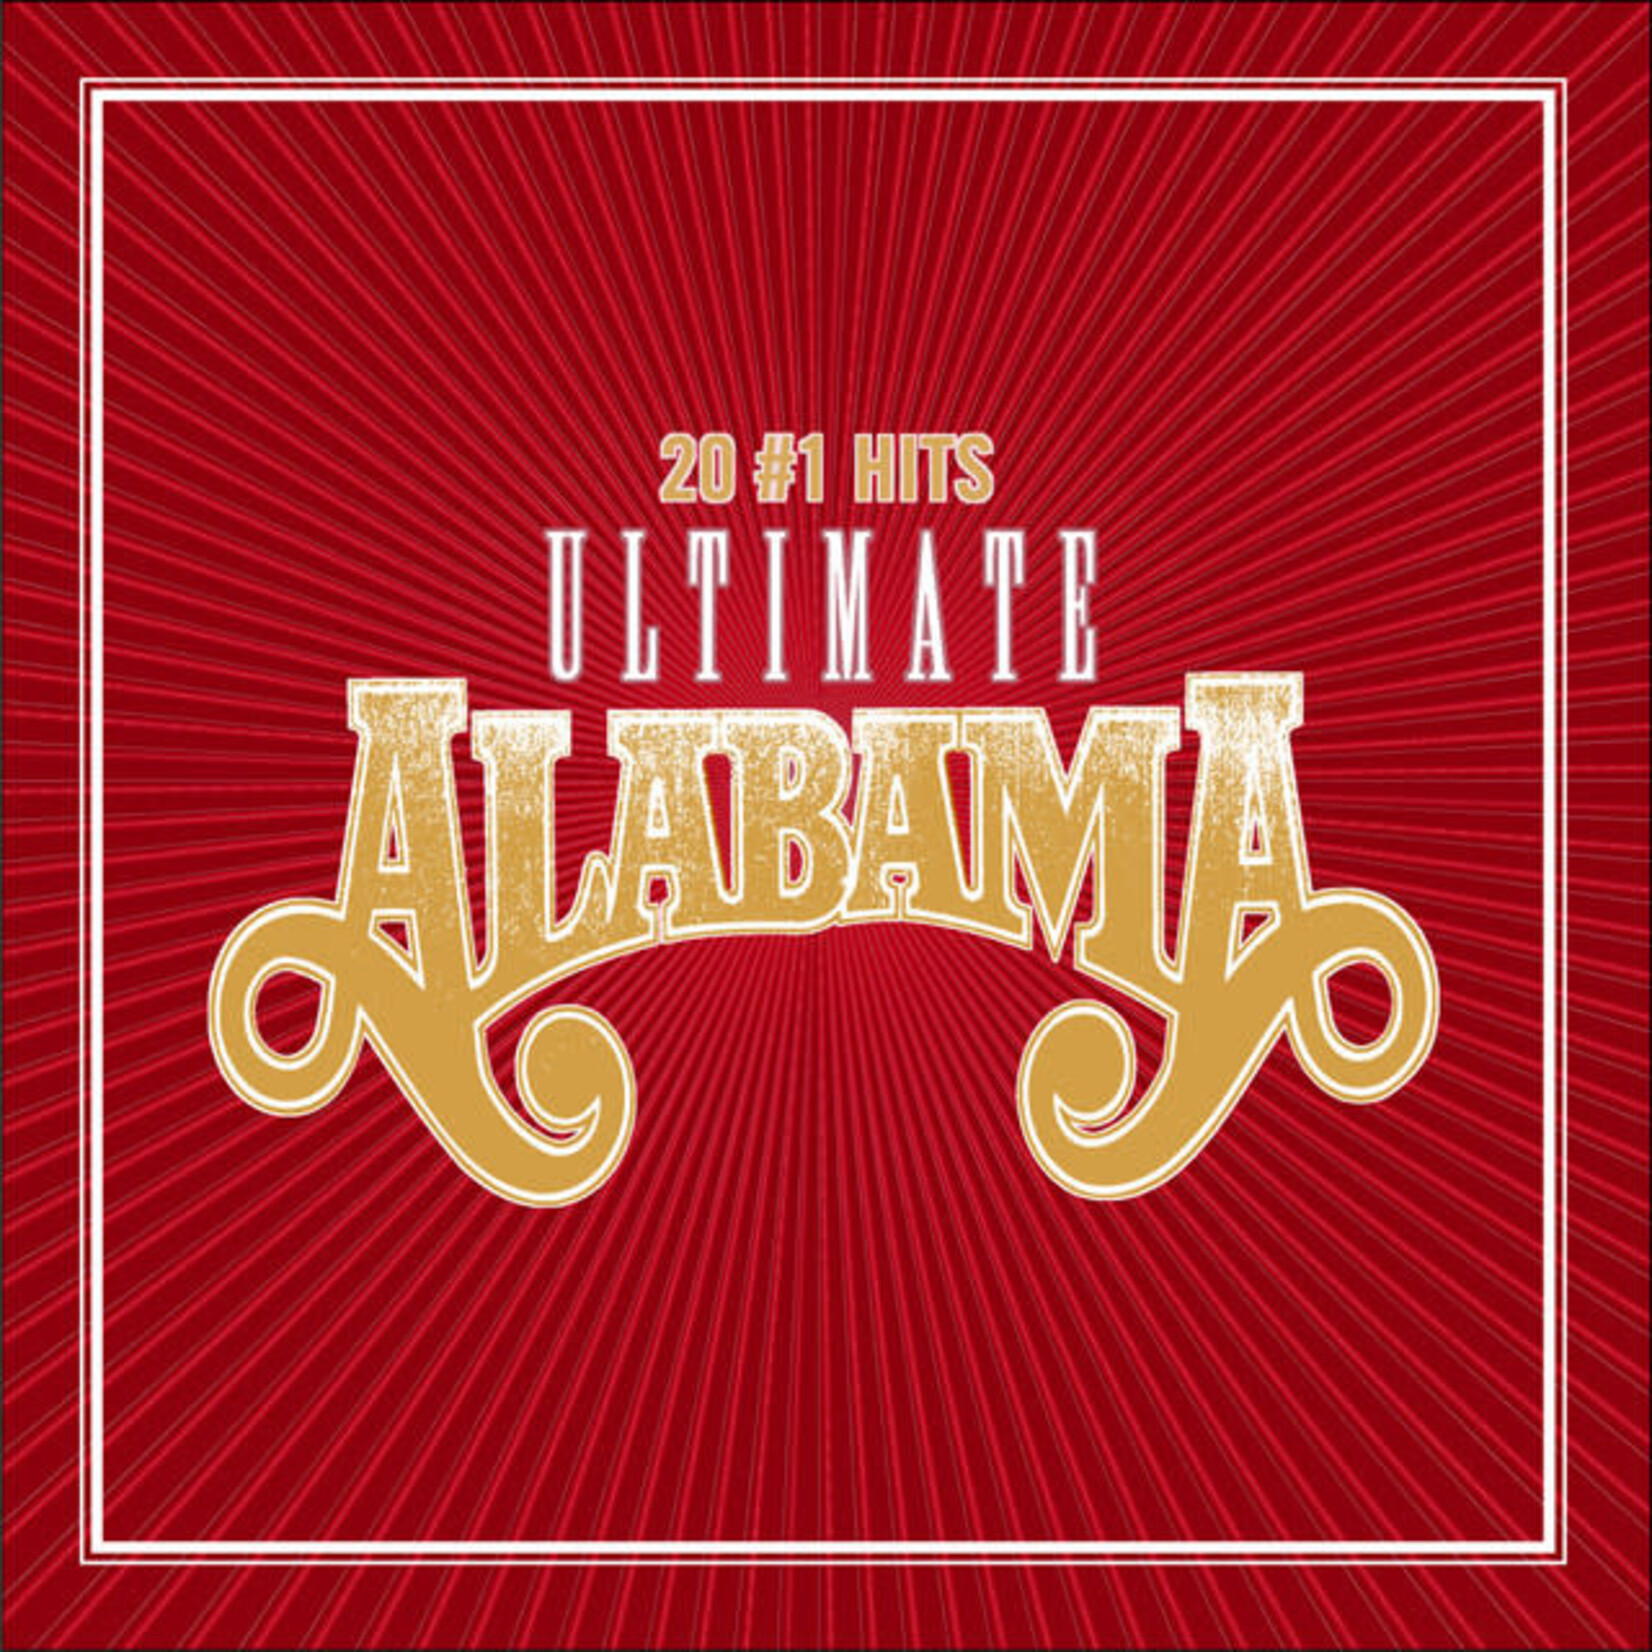 Alabama - Ultimate Alabama: 20 #1 Hits [USED CD]